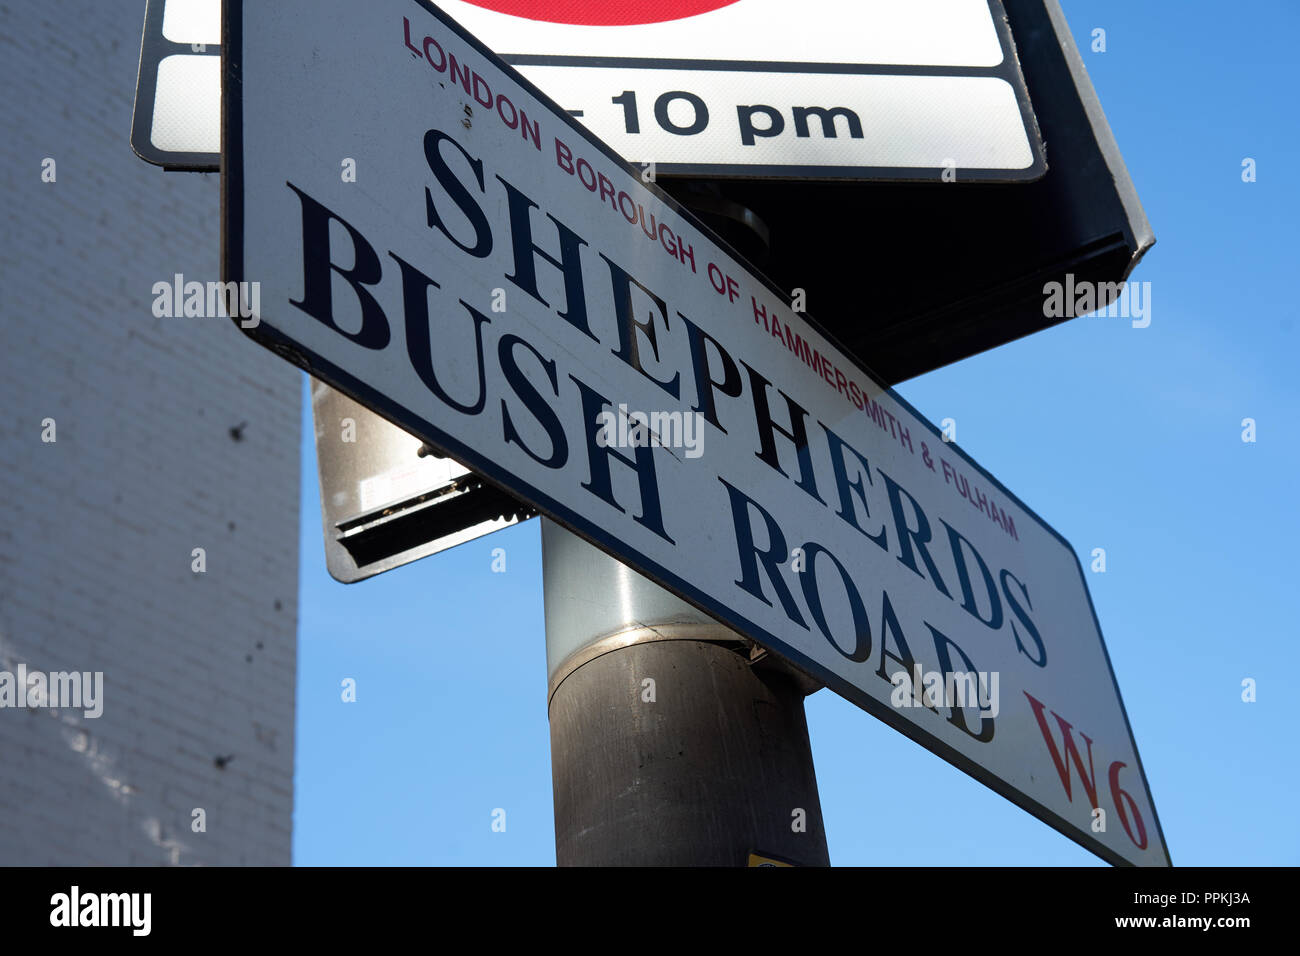 shepherds bush road sign Stock Photo